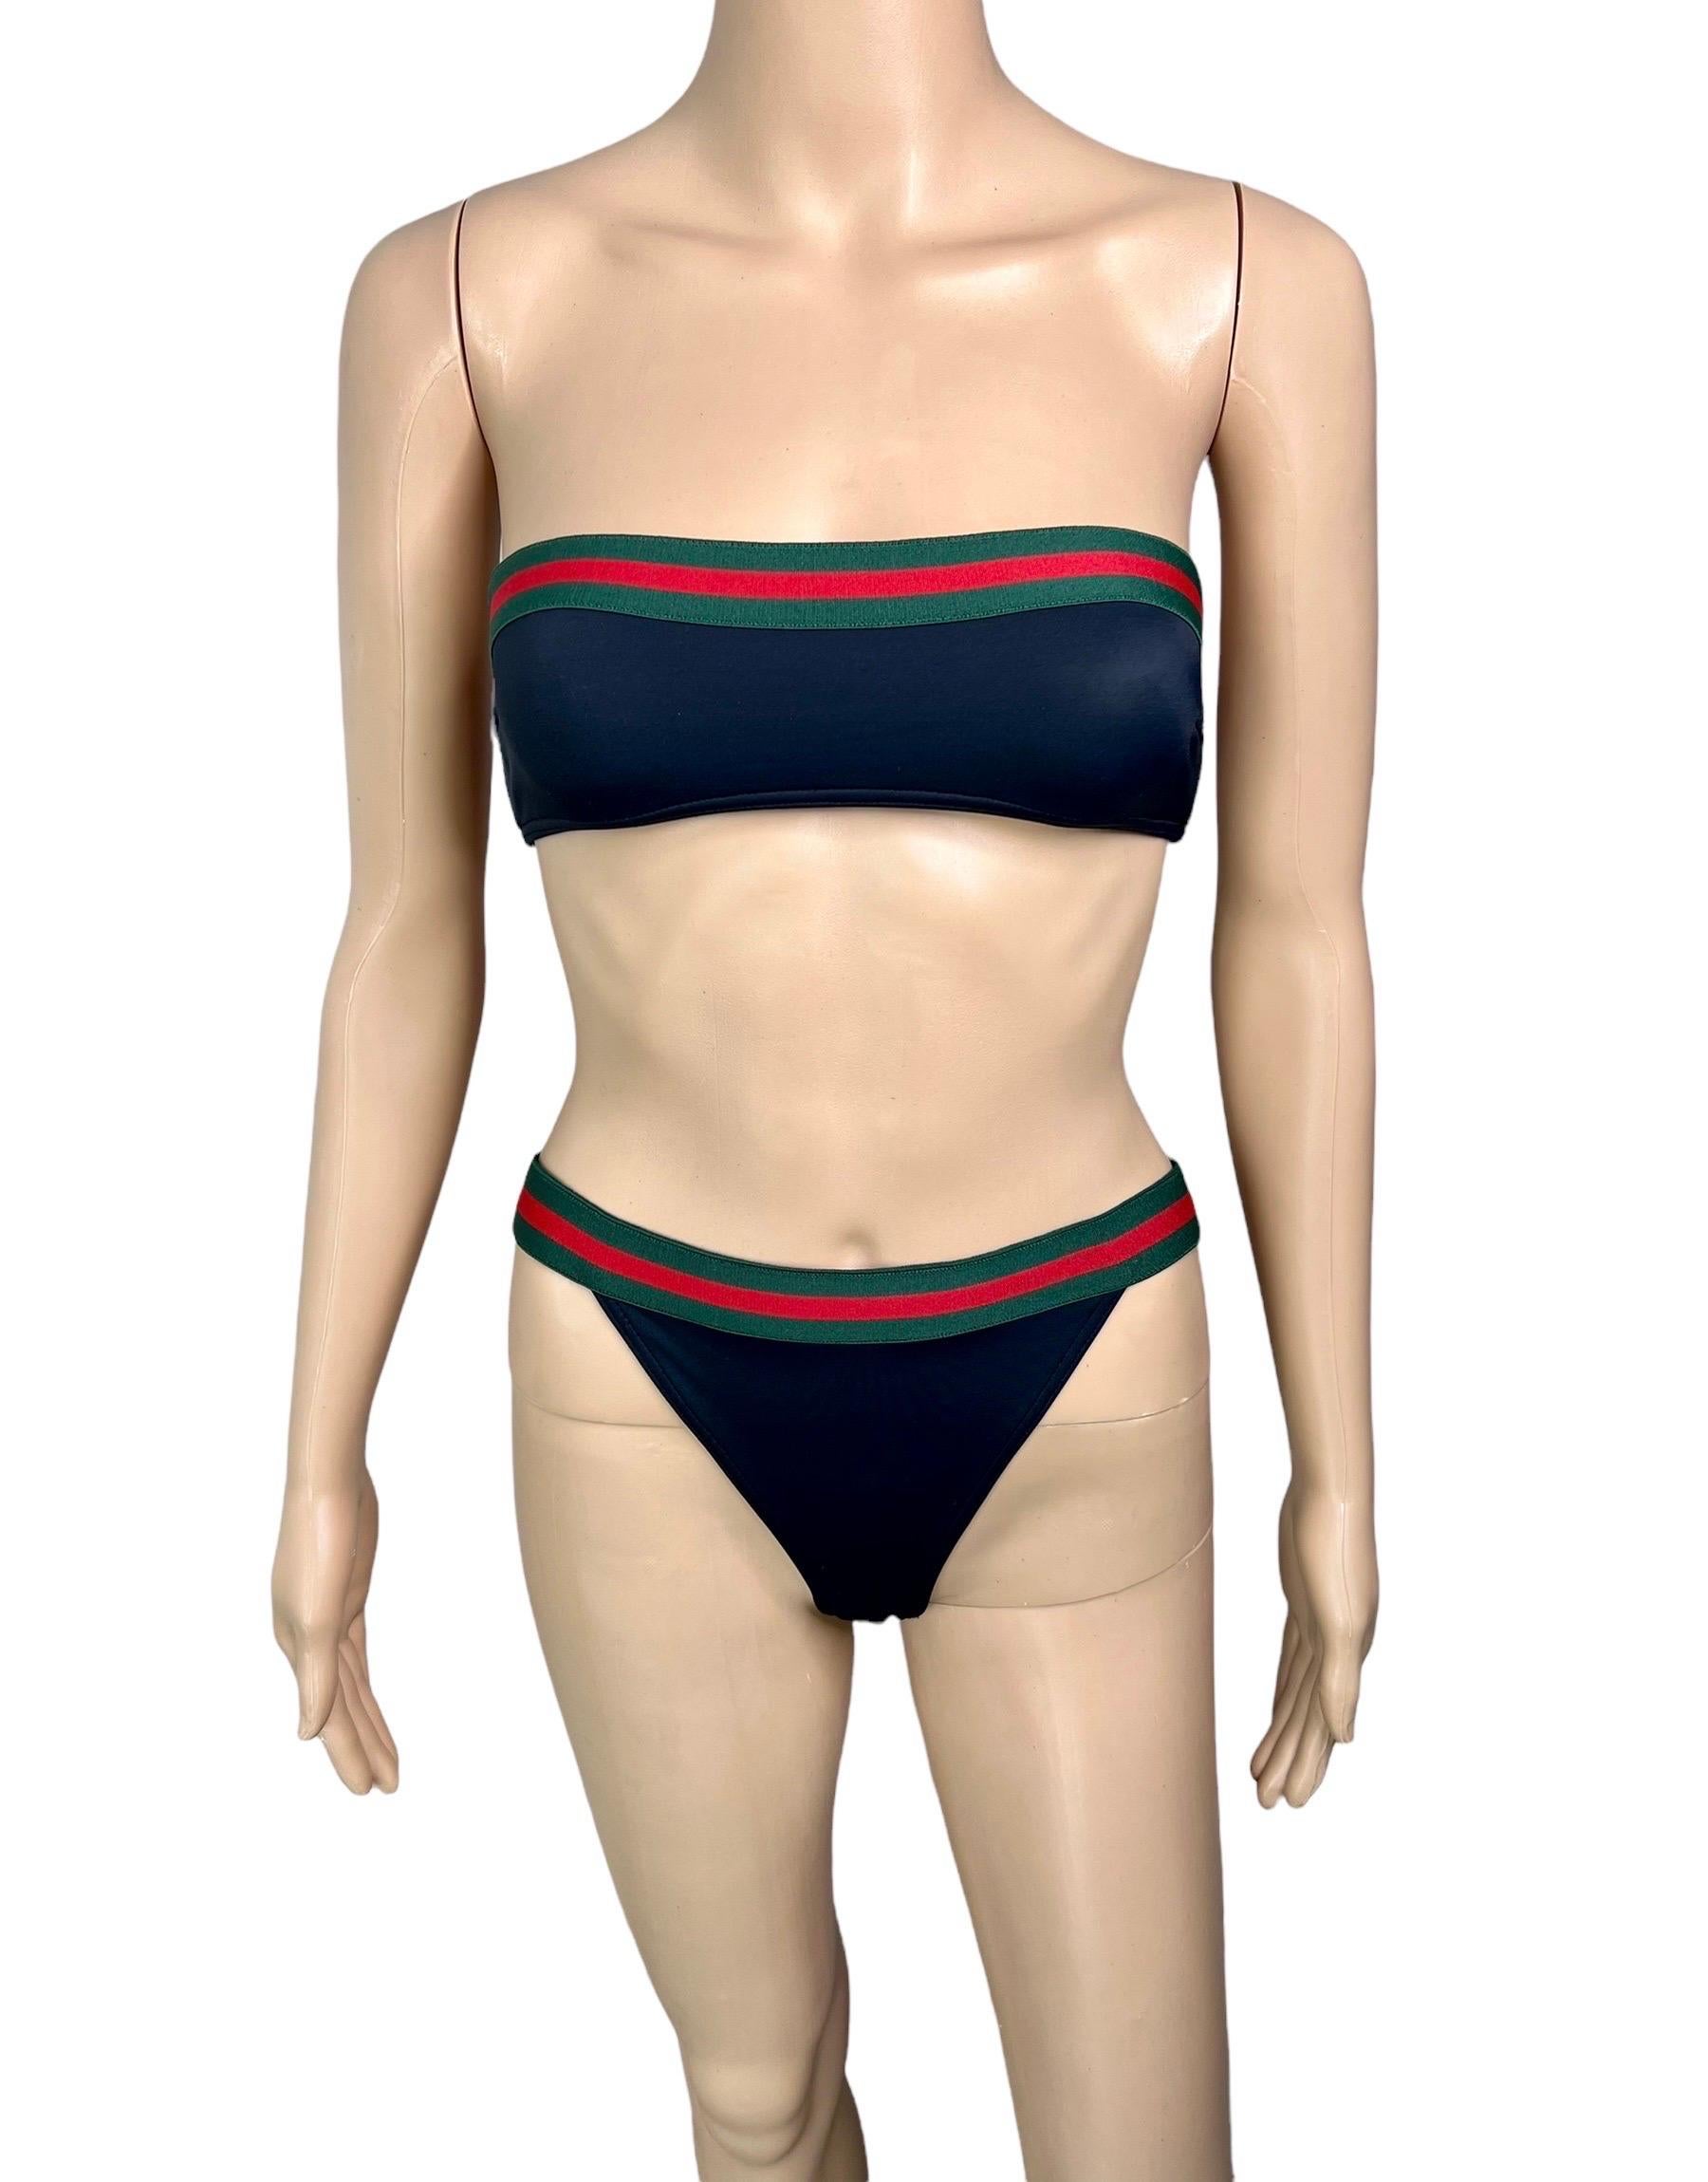 Women's or Men's Tom Ford for Gucci S/S 1999 Strapless Bra & Bikini Two-Piece Swimwear Swimsuit For Sale